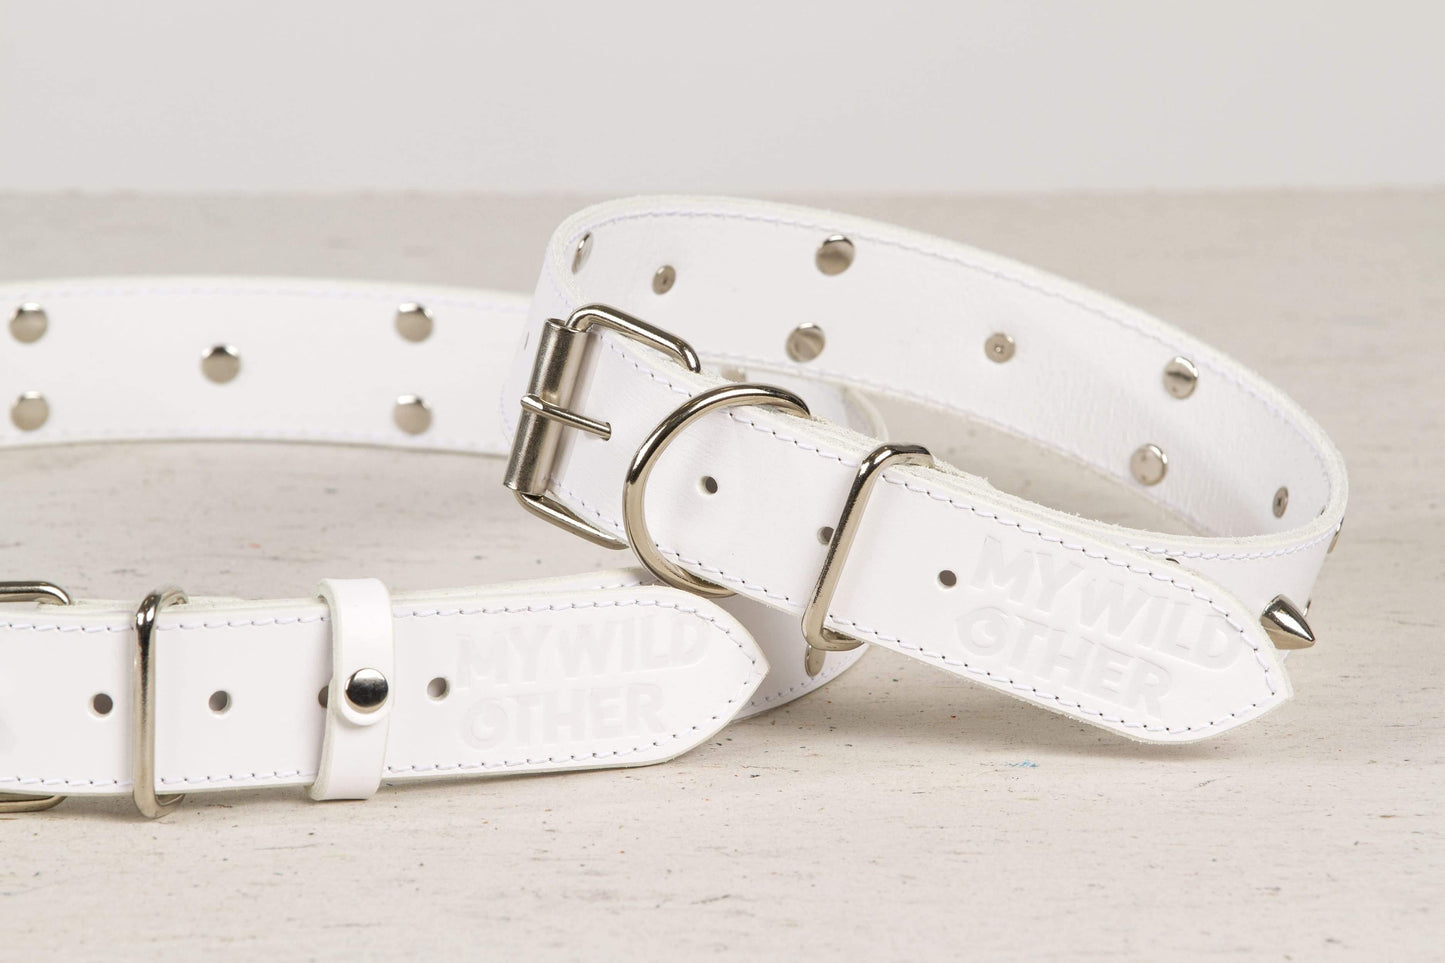 Handmade white leather STUDDED dog collar - premium dog goods handmade in Europe by animalistus